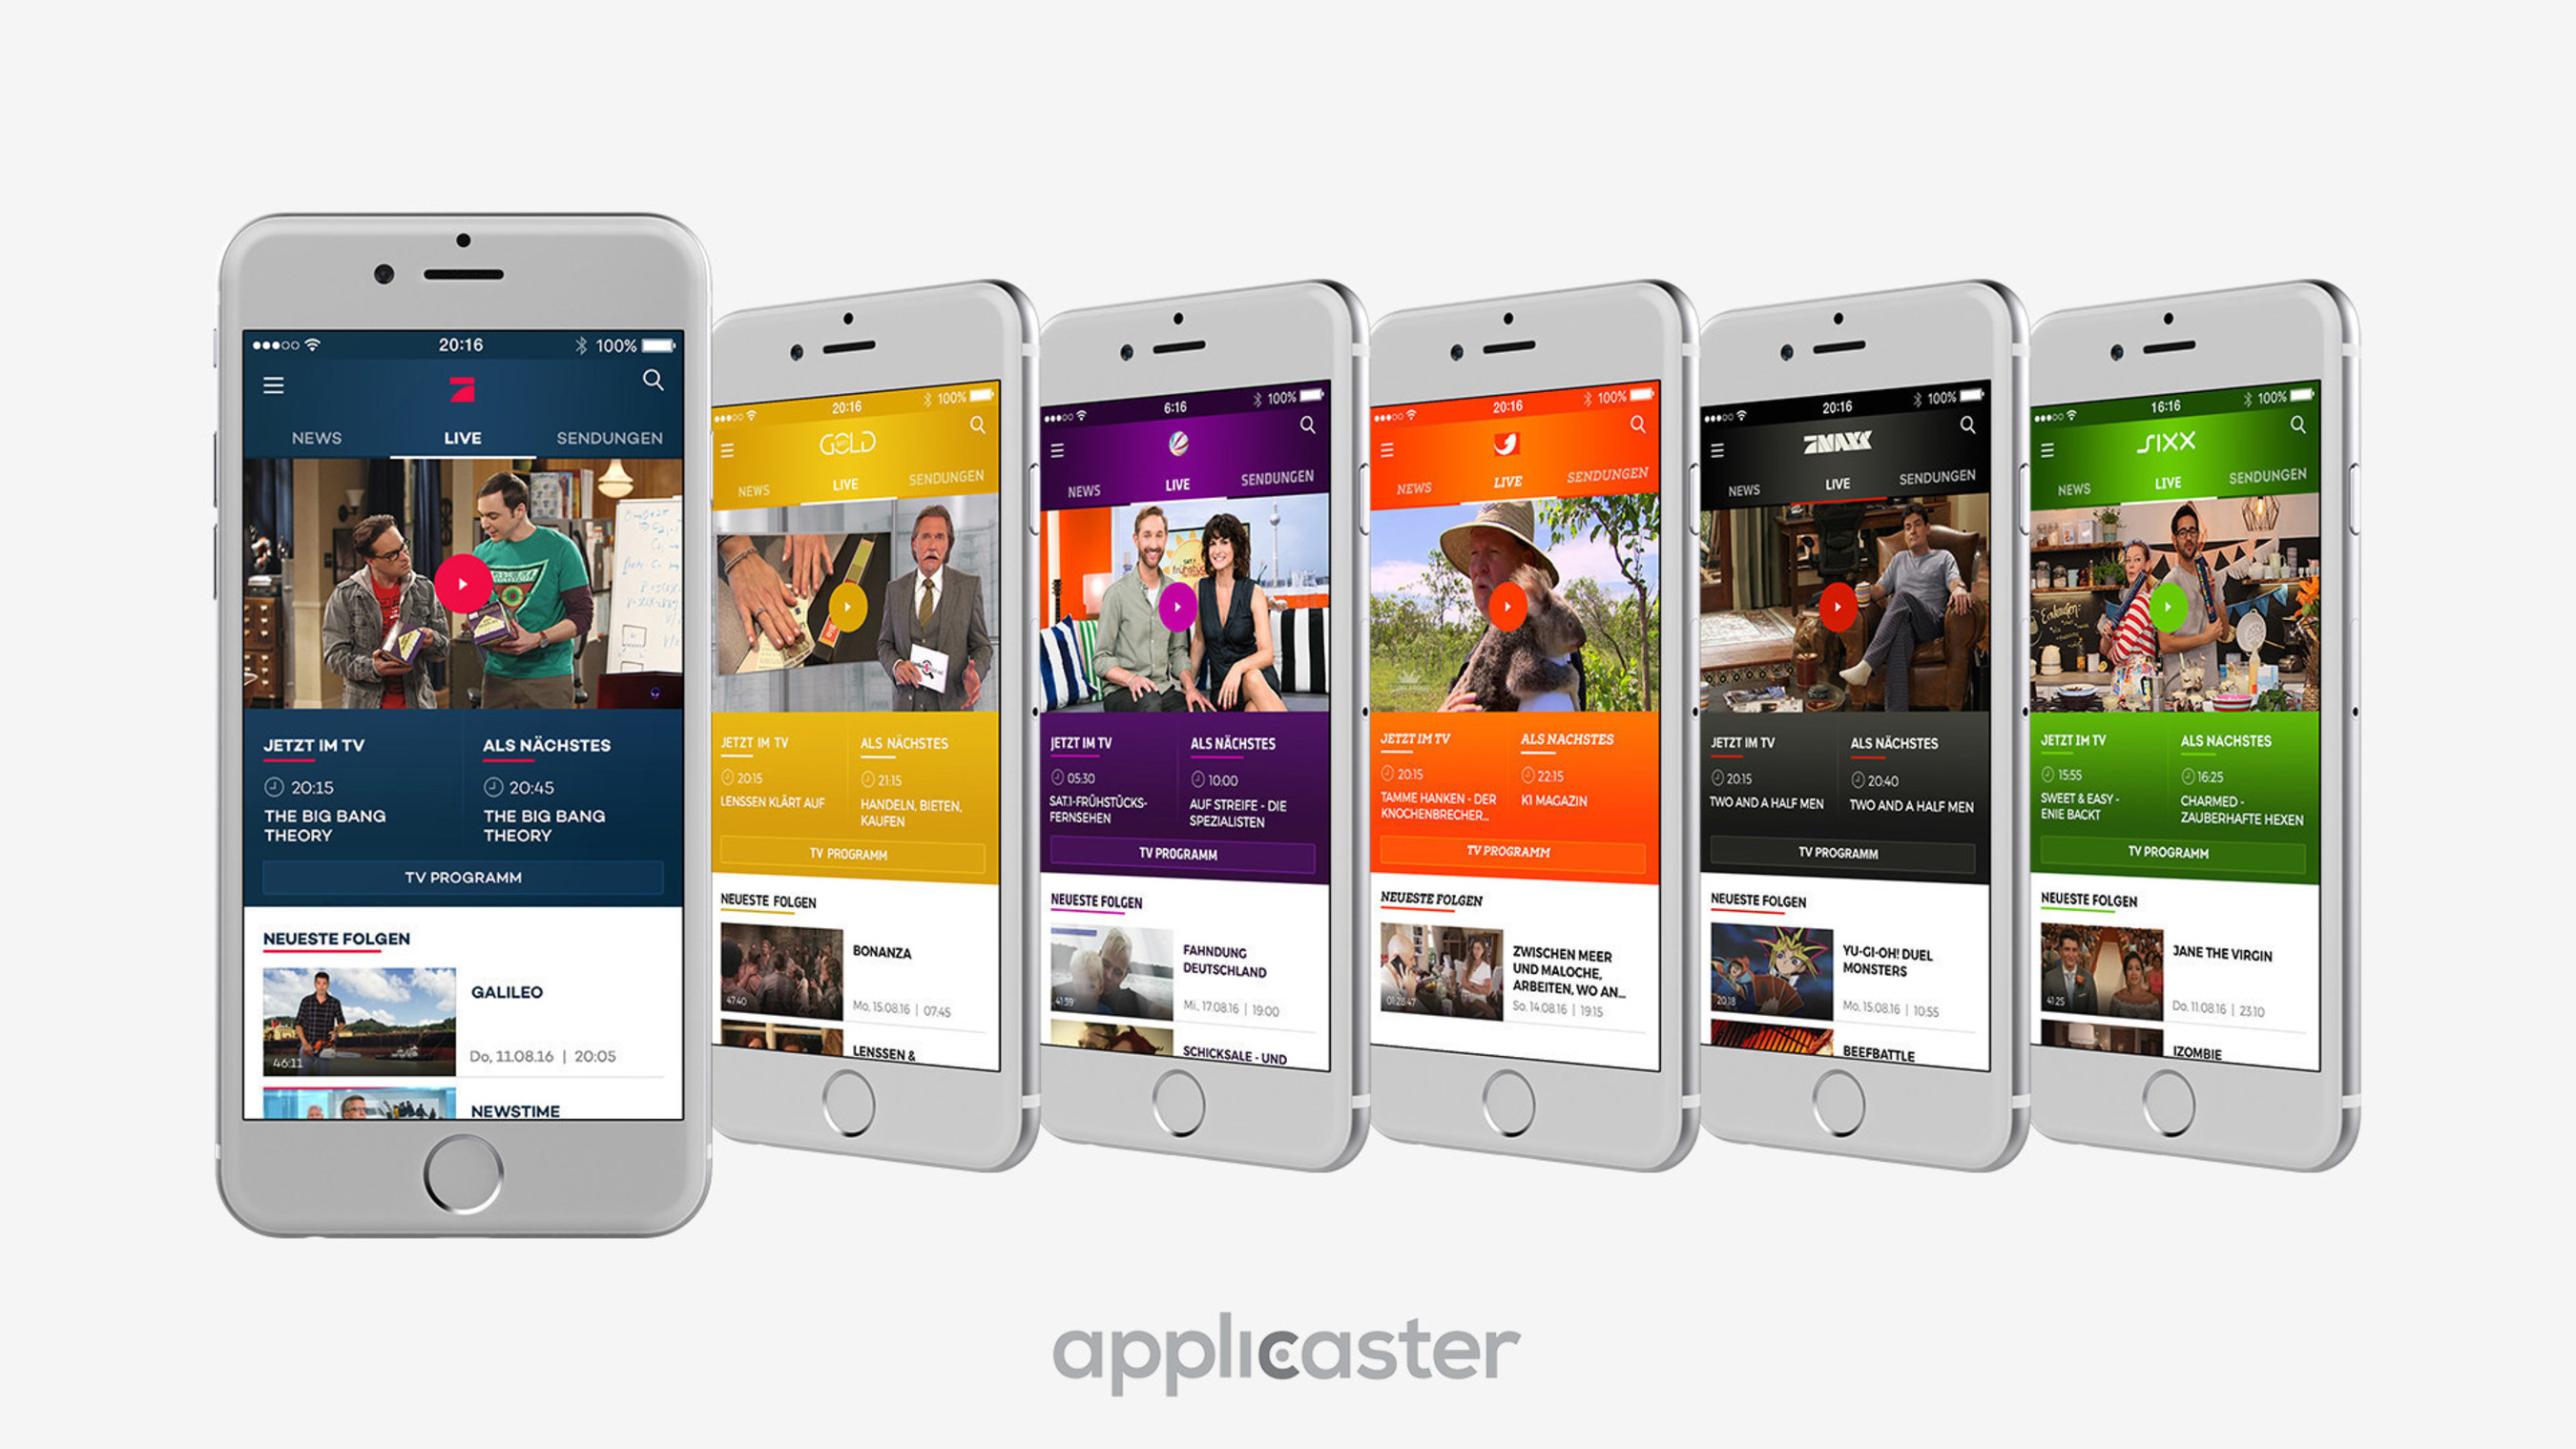 ProSiebenSat.1 Apps built using Applicaster's SaaS platform